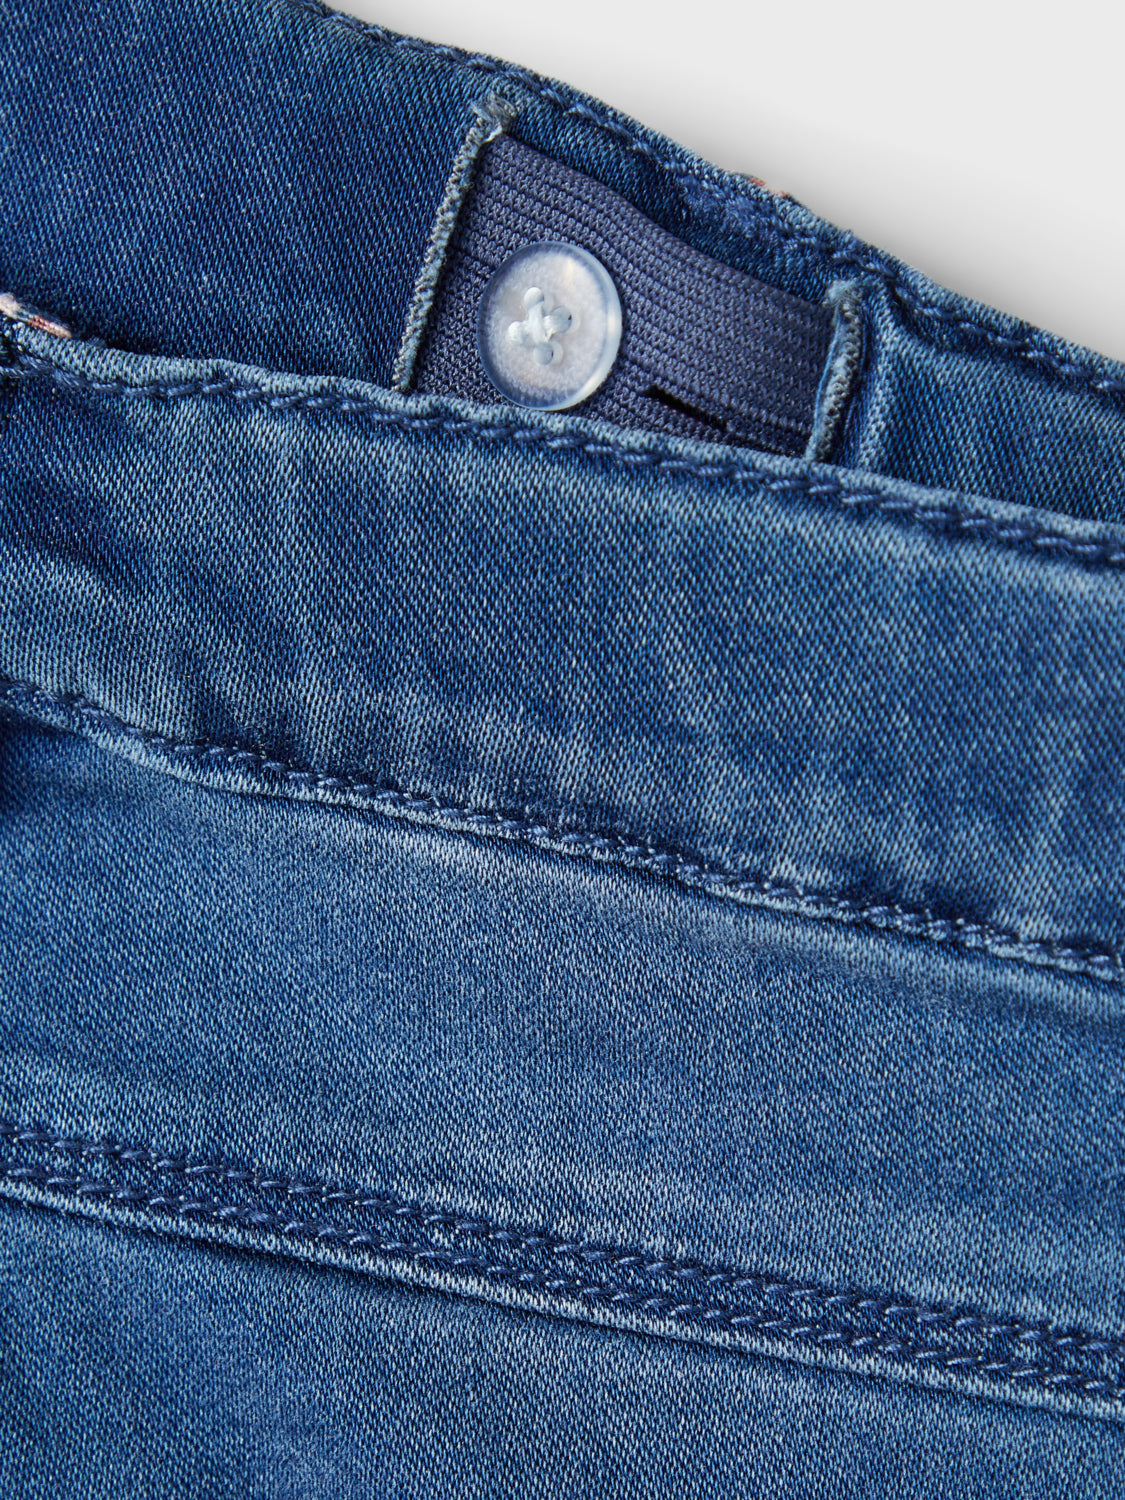 NMFSALLI Jeans - Medium Blue Denim